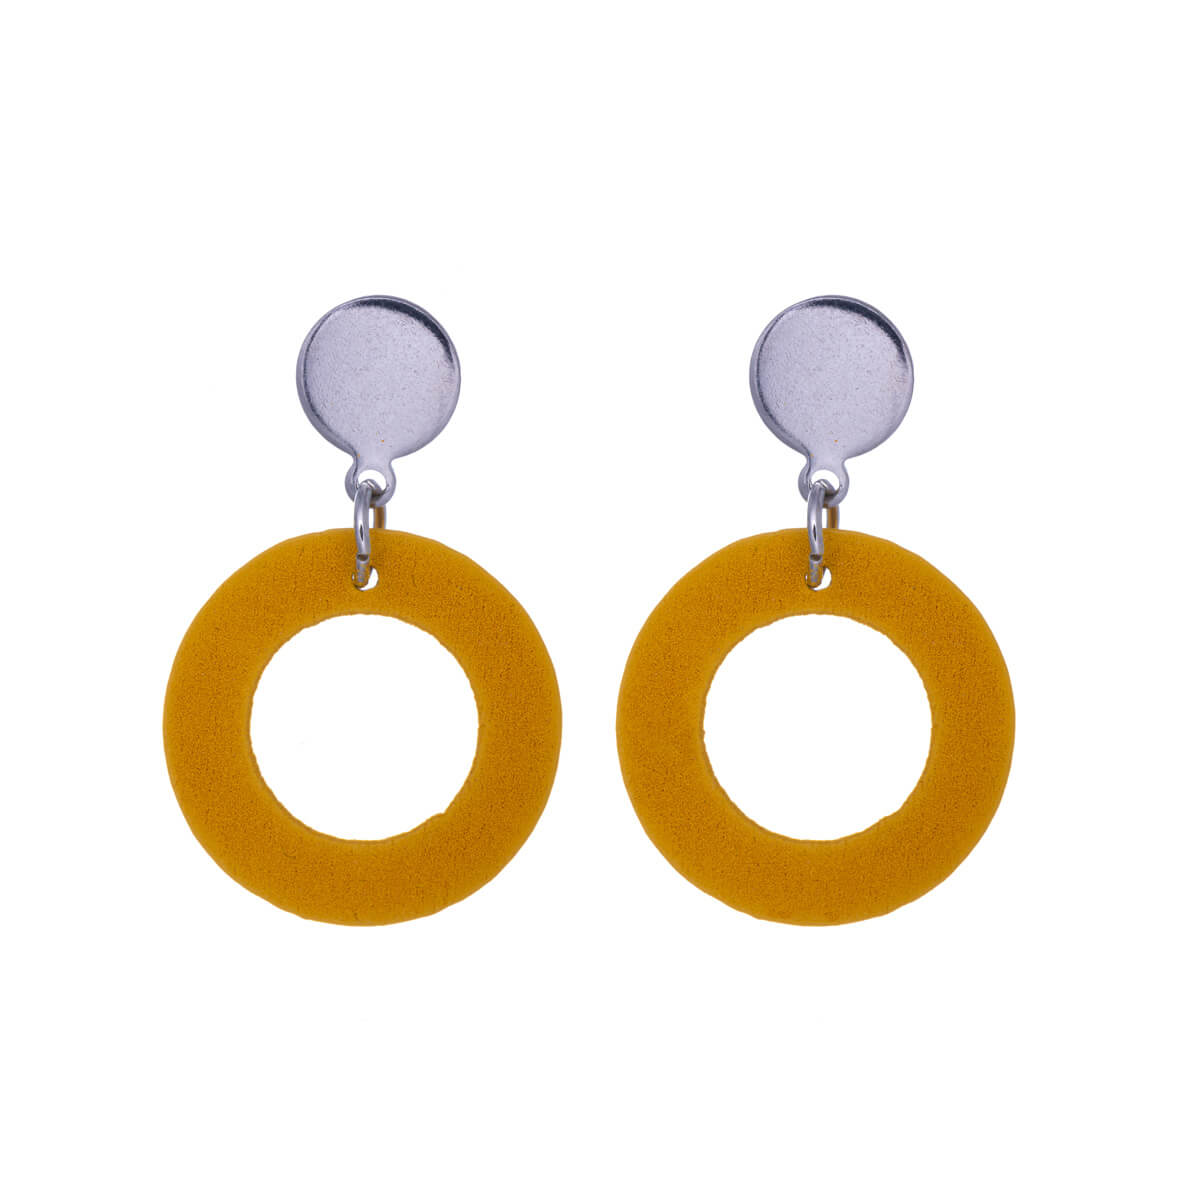 Wooden hanging rings earrings (Steel 316L)